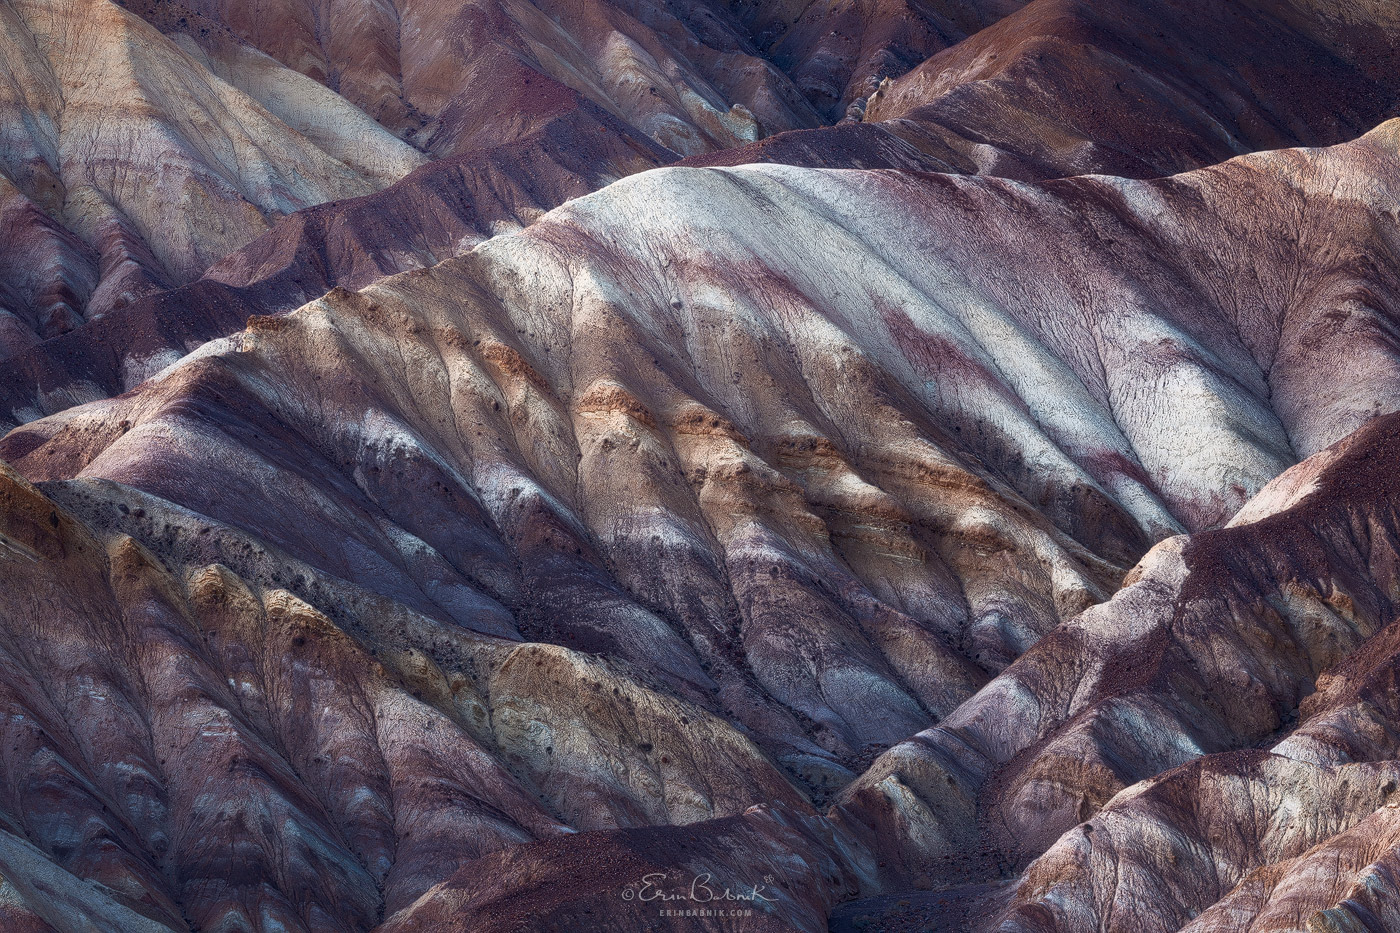 Death Valley National Park Adventure Workshop - Photography Workshops by Erin Babnik